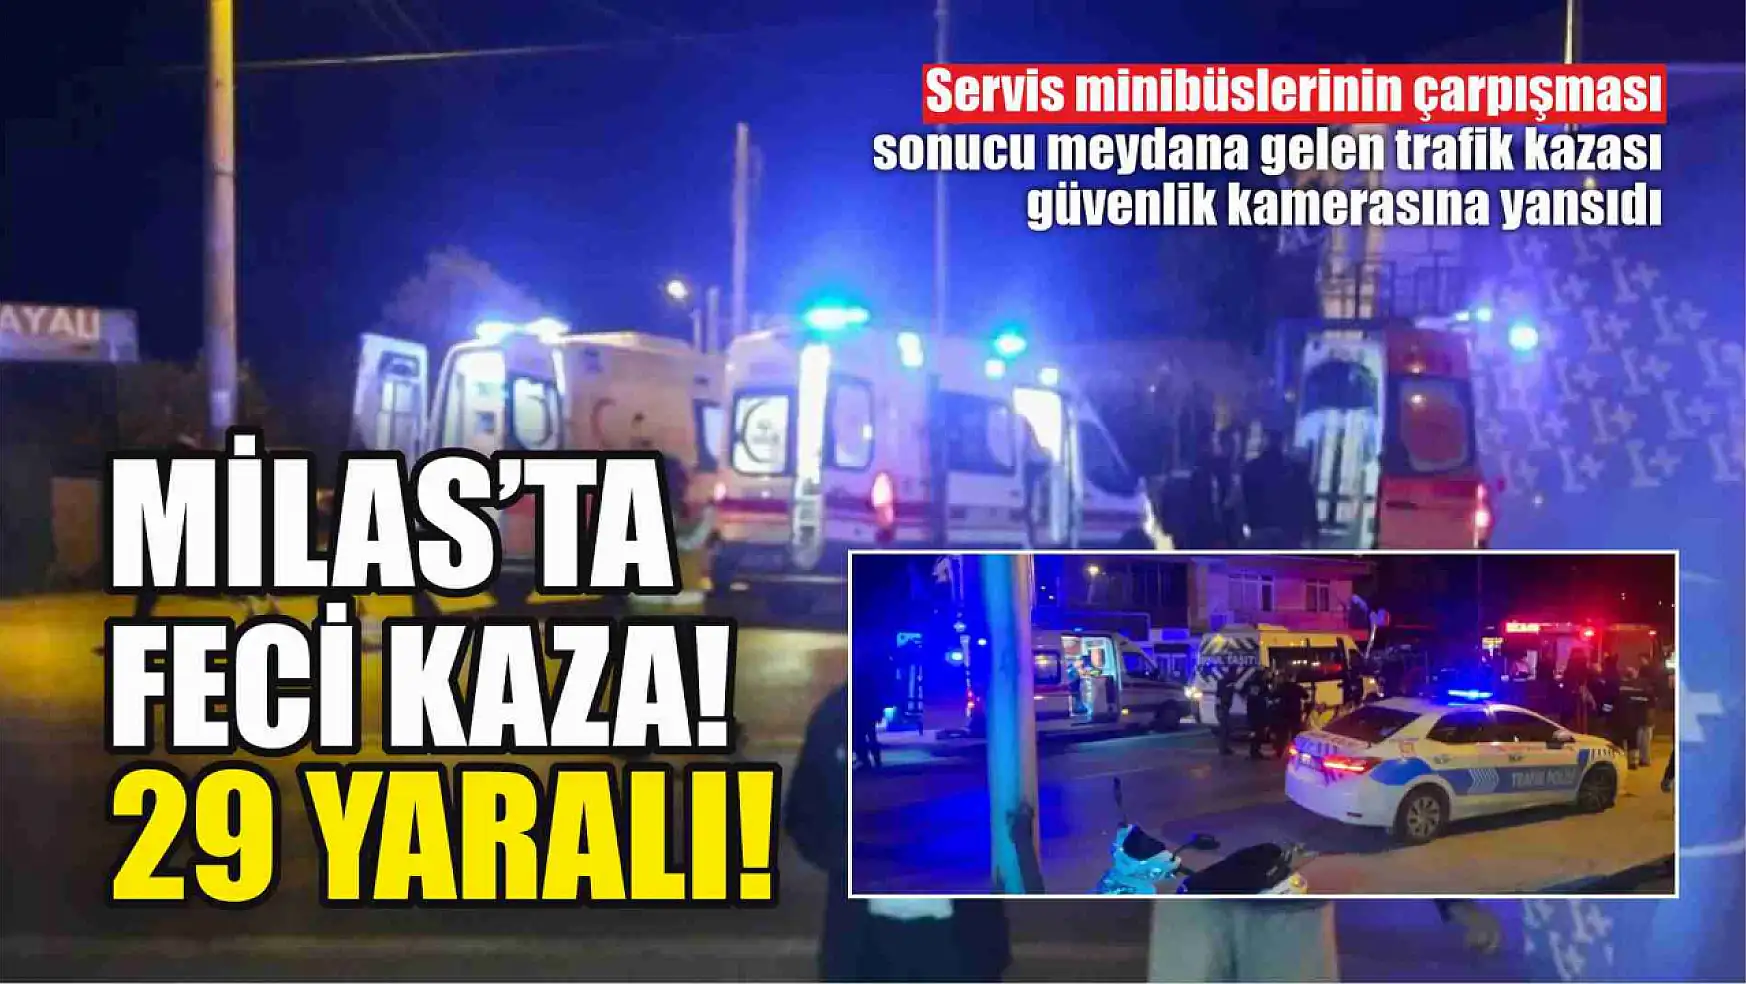 Milas'ta feci kaza! 29 yaralı!